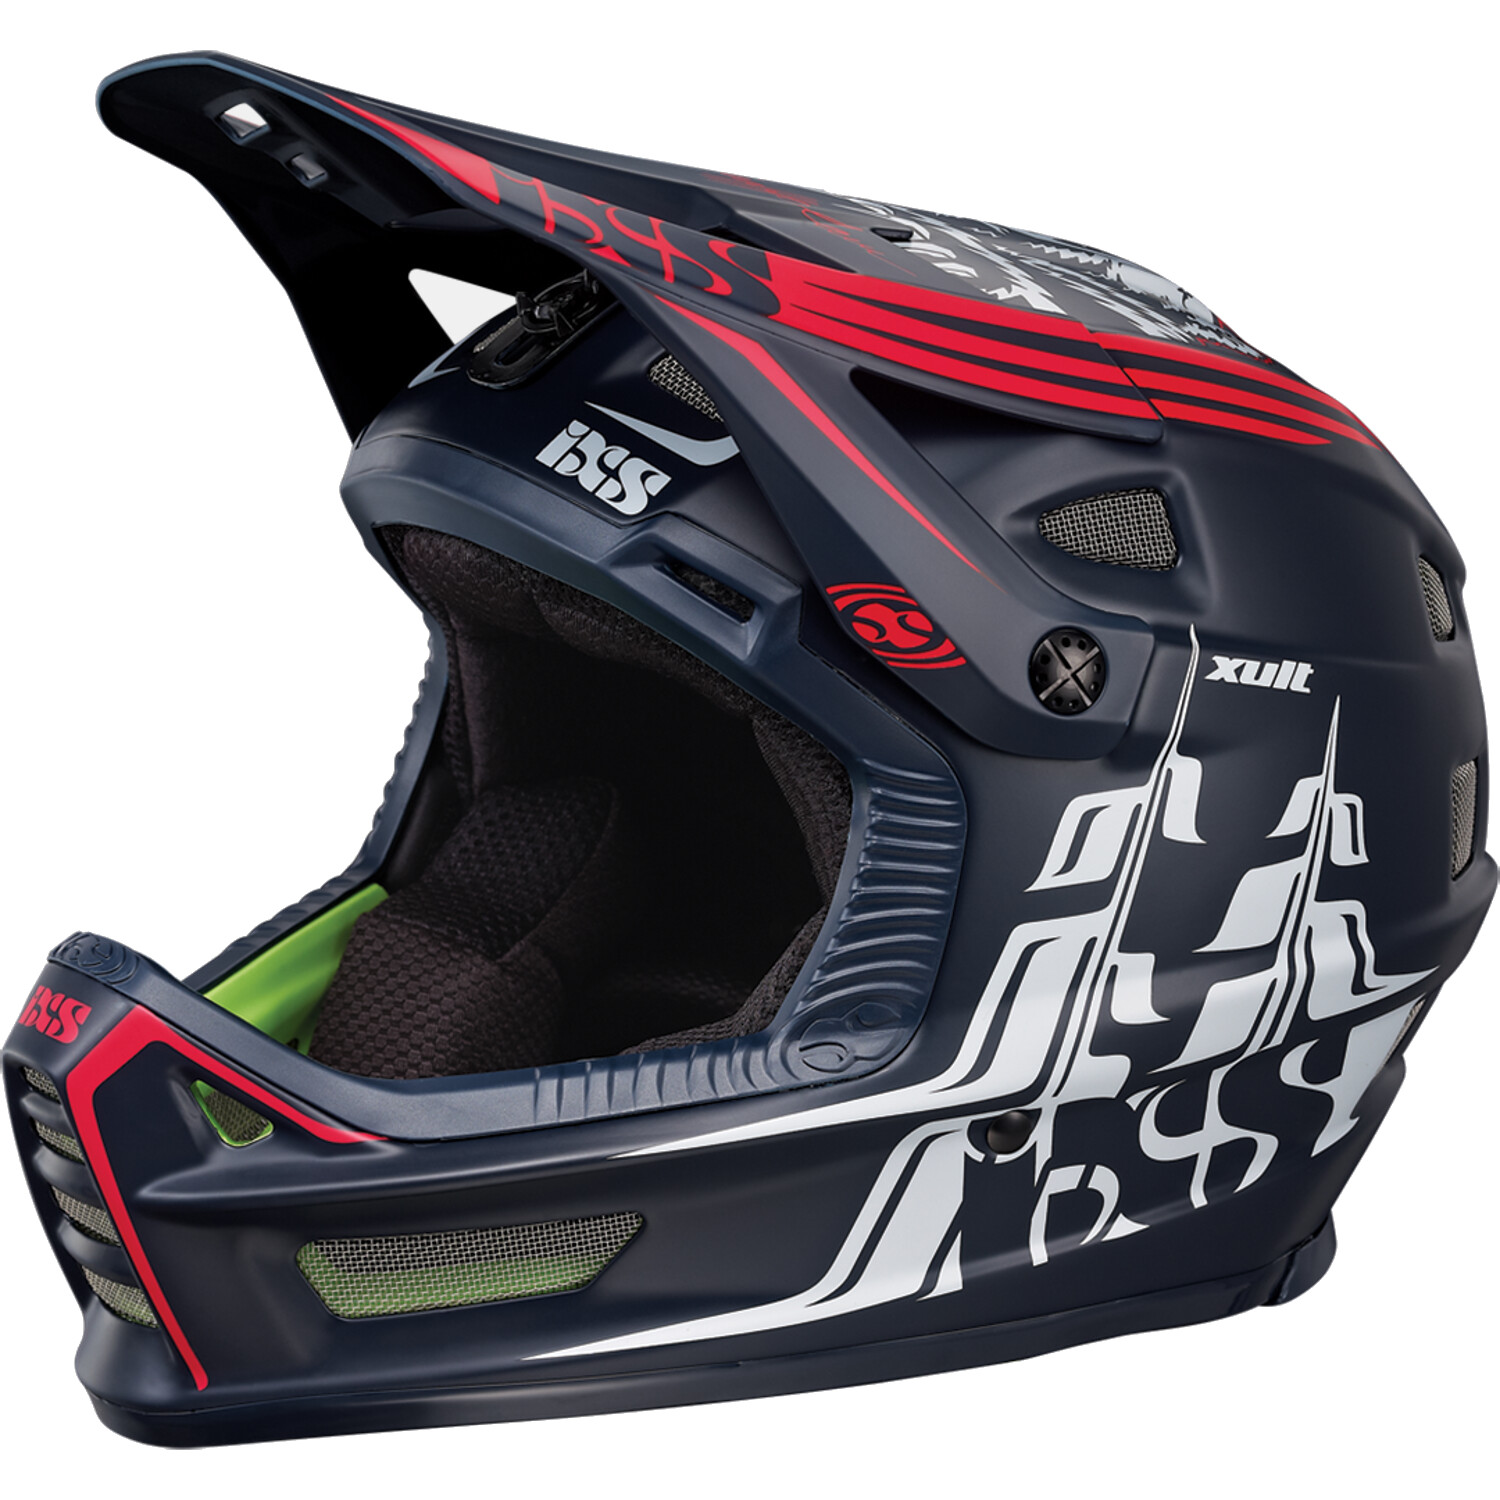 IXS Downhill-MTB Helm Xult Schwarz/Rot - Darren Berrecloth Edition